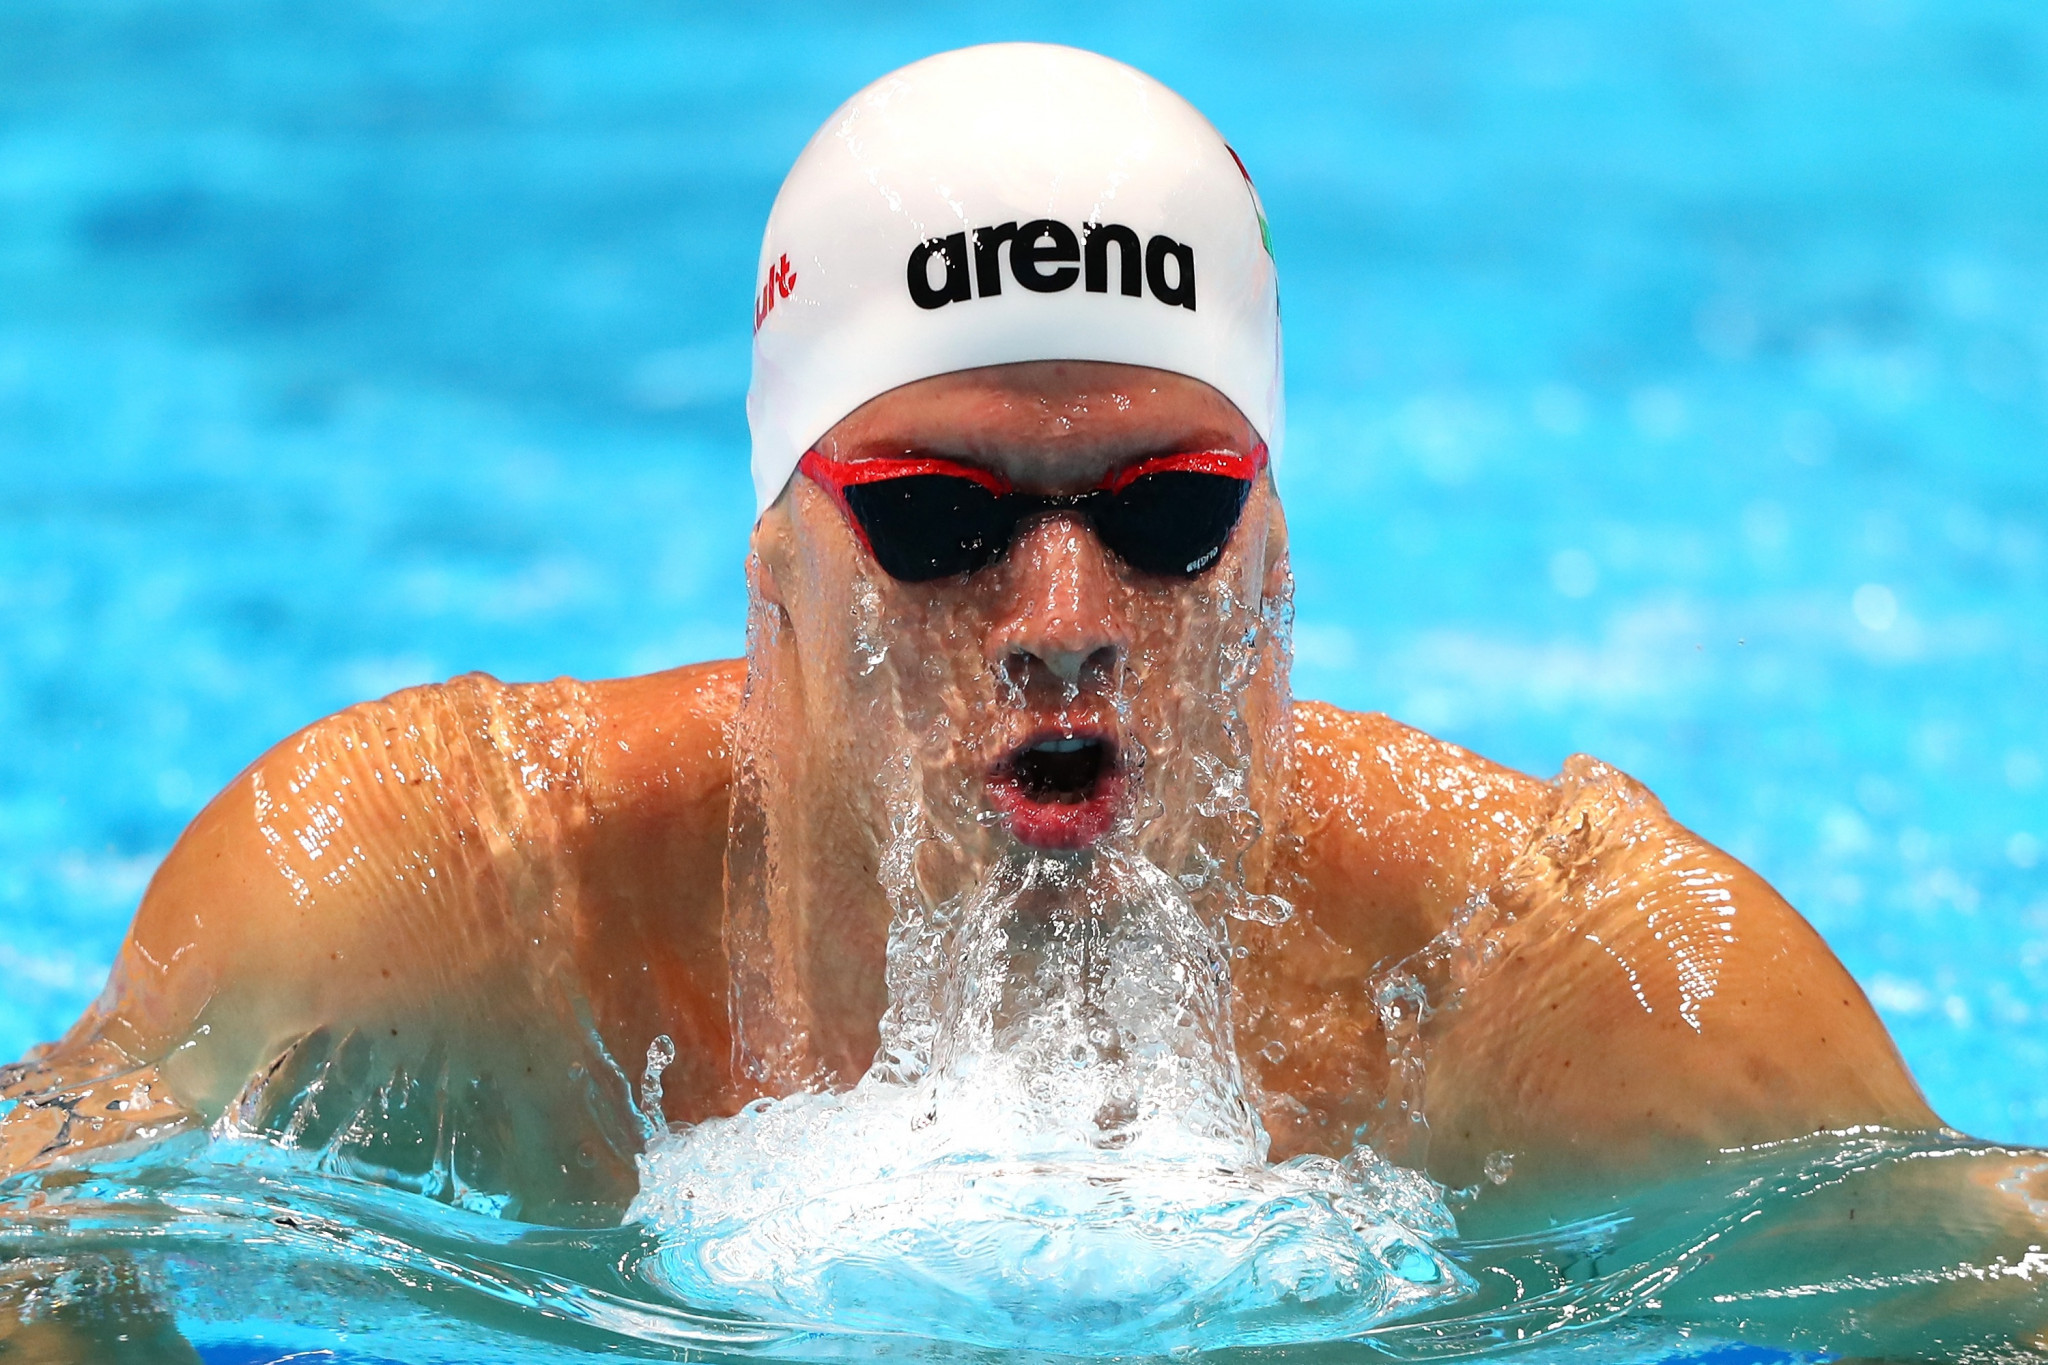 Hungary's Olympic gold medal-winning swimmer Gyurta retires aged 28